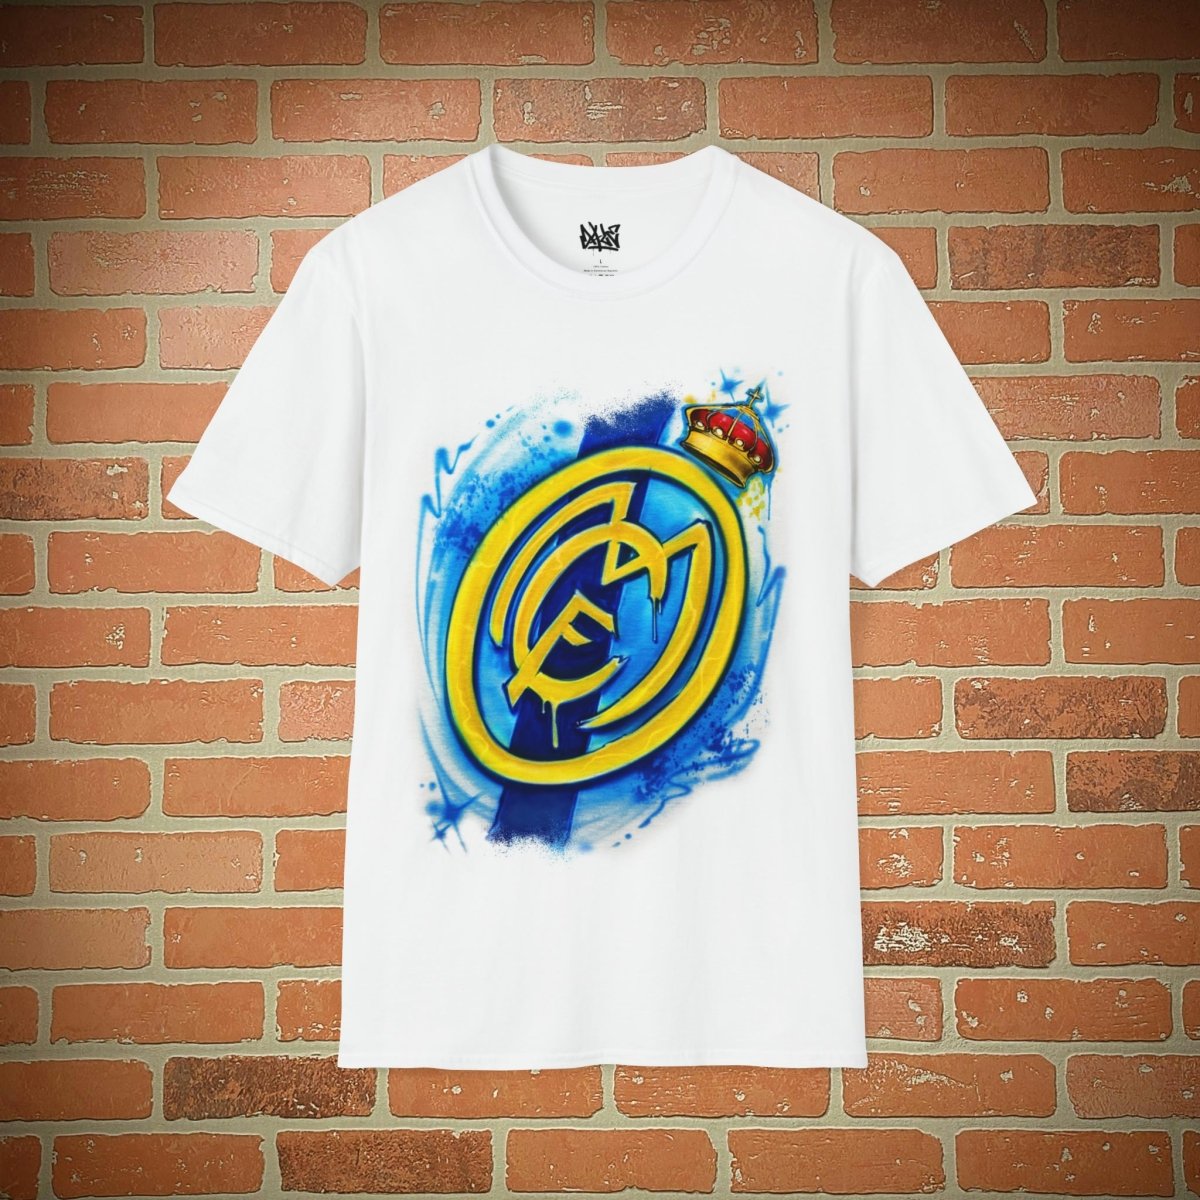 Real Madrid Graffiti Style Shirt Customizable Airbrush T shirt Design from Airbrush Customs x Dale The Airbrush Guy